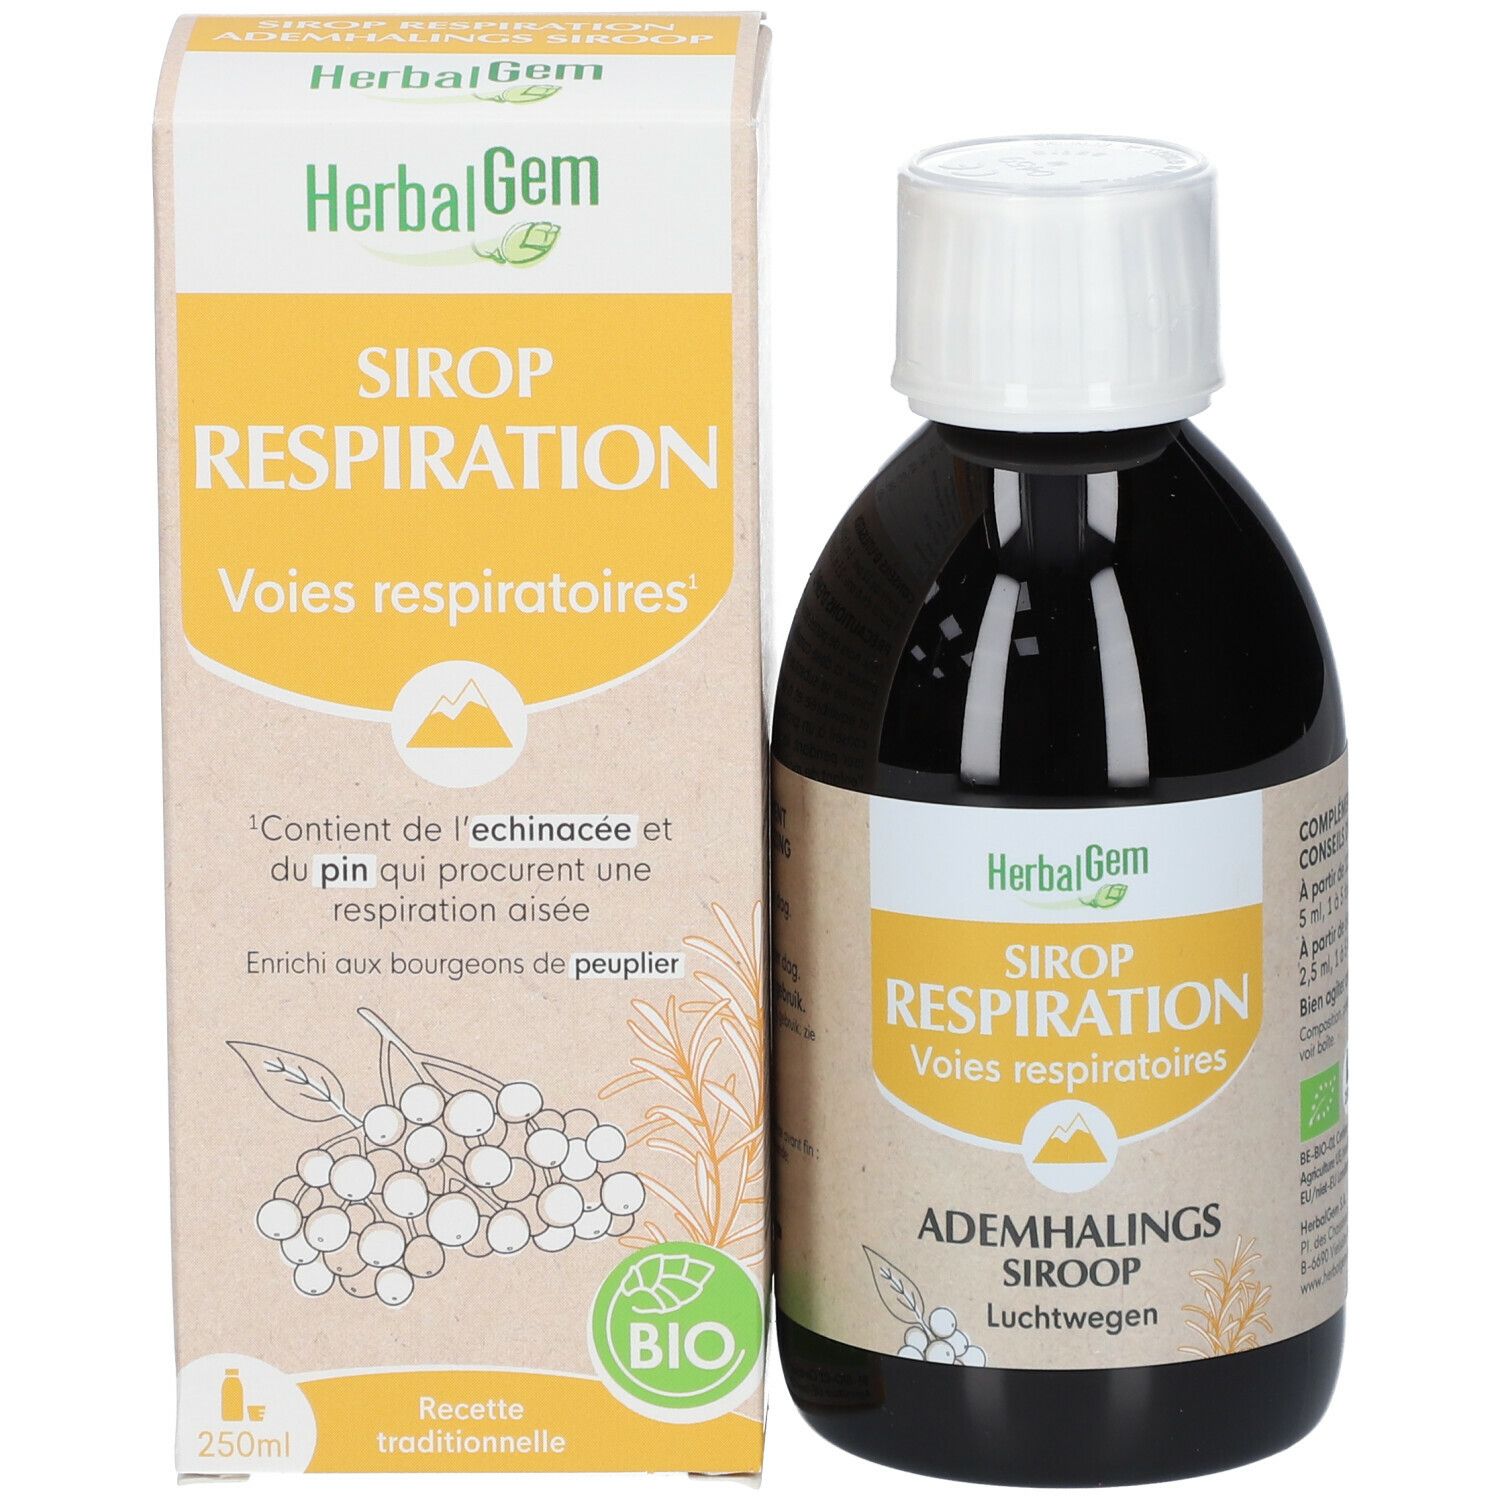 HerbalGem Sirop Pour la Respiration Bio